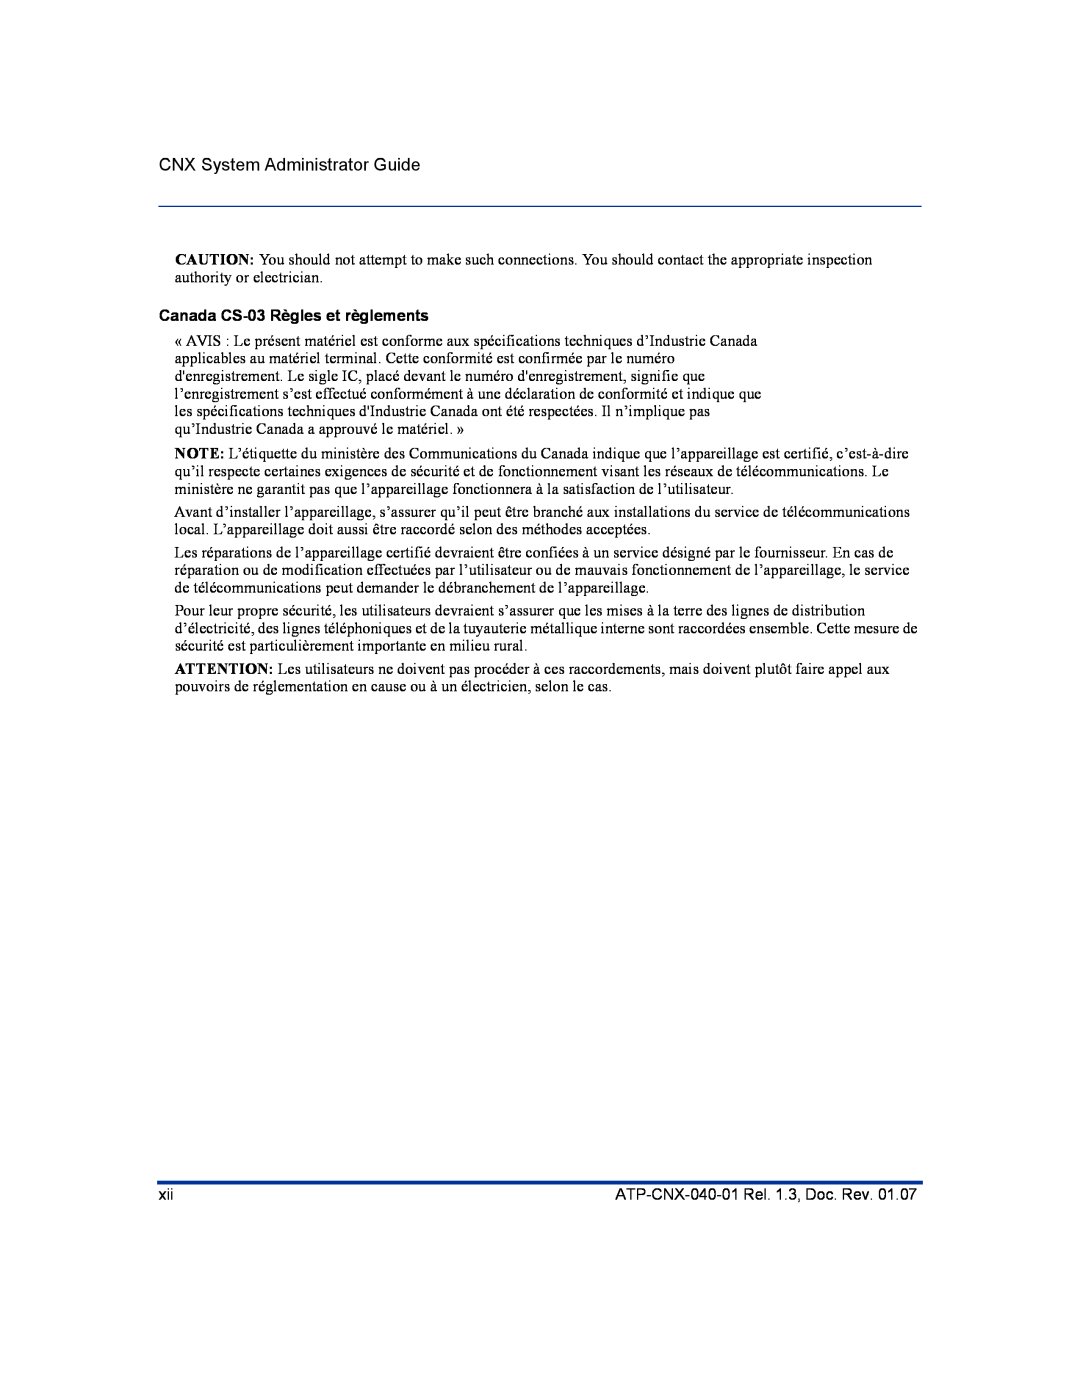 Aastra Telecom ATP-CNX-040-01 manual CNX System Administrator Guide, Canada CS-03 Règles et règlements 